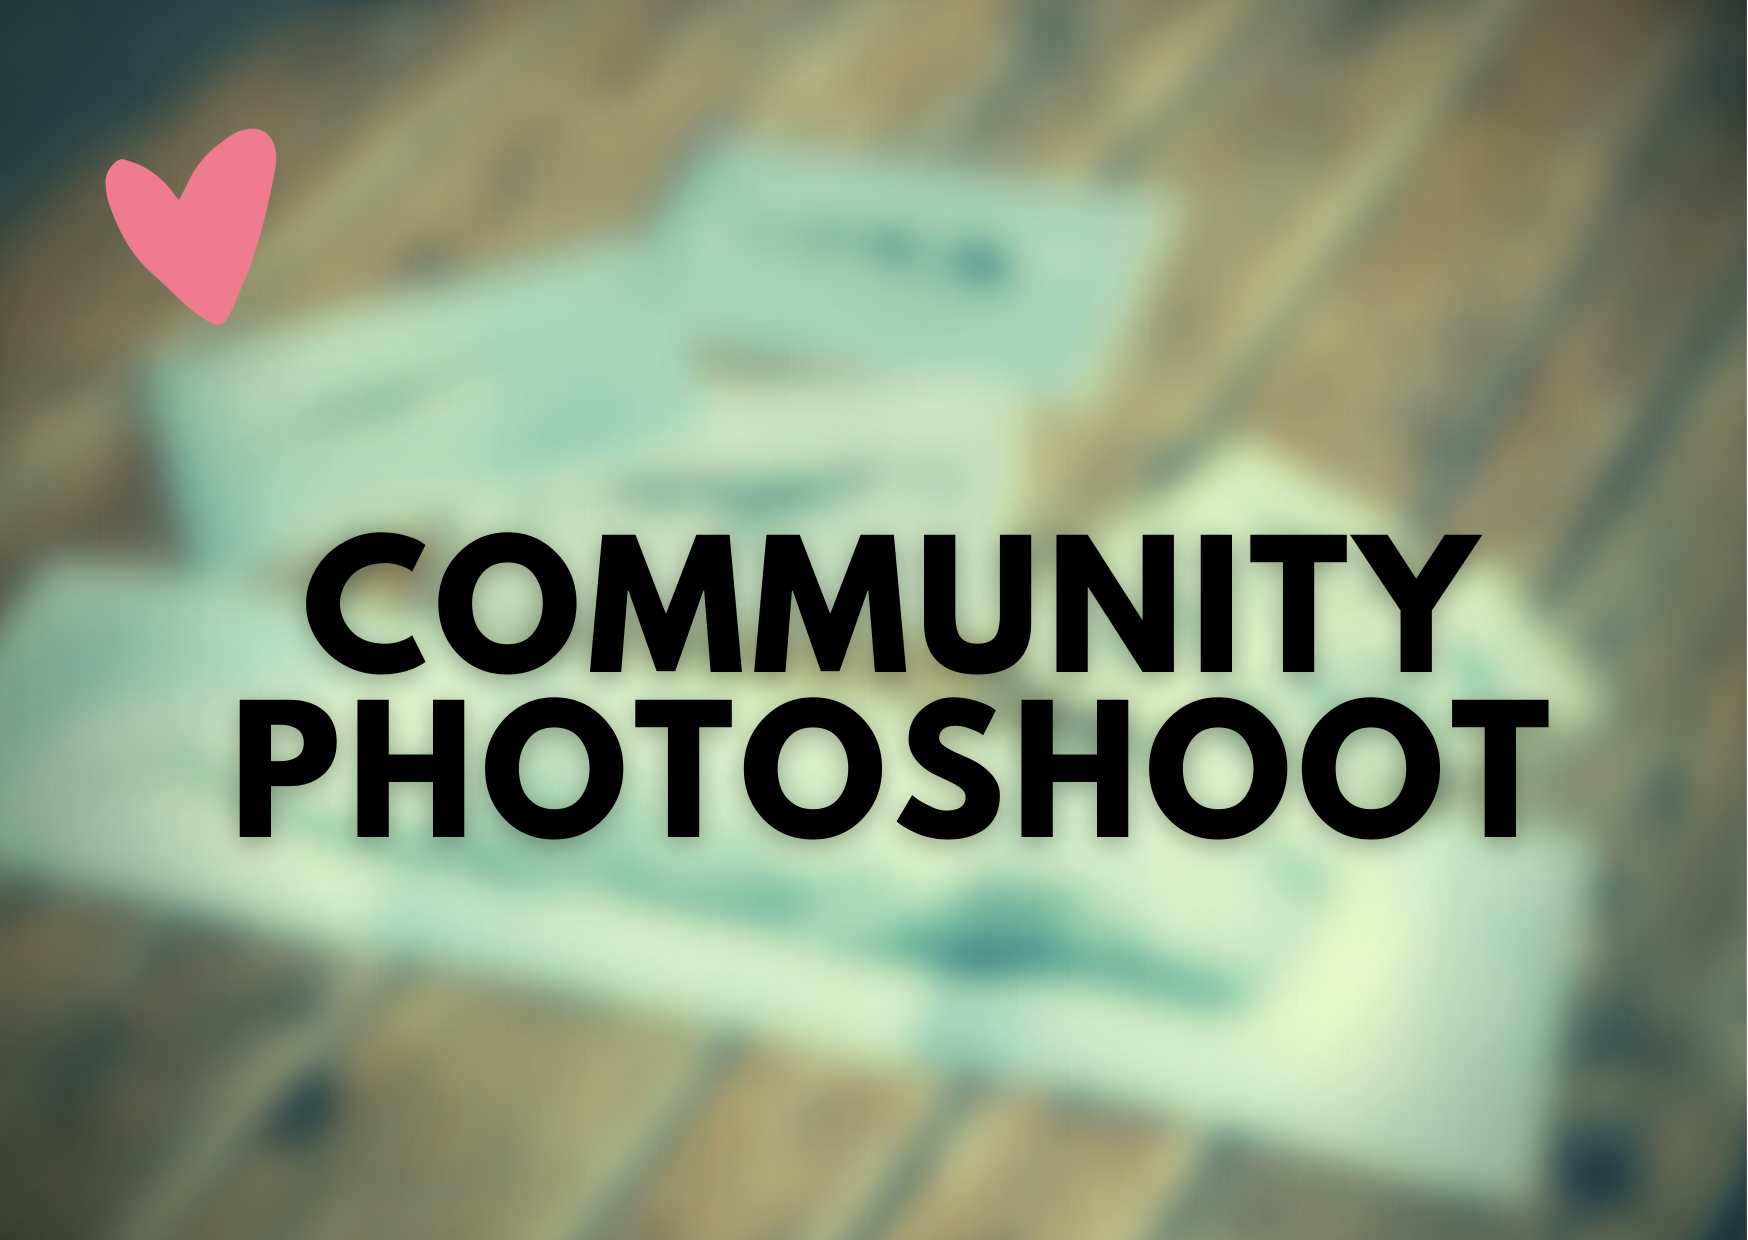 HeartBid Community Photoshoot